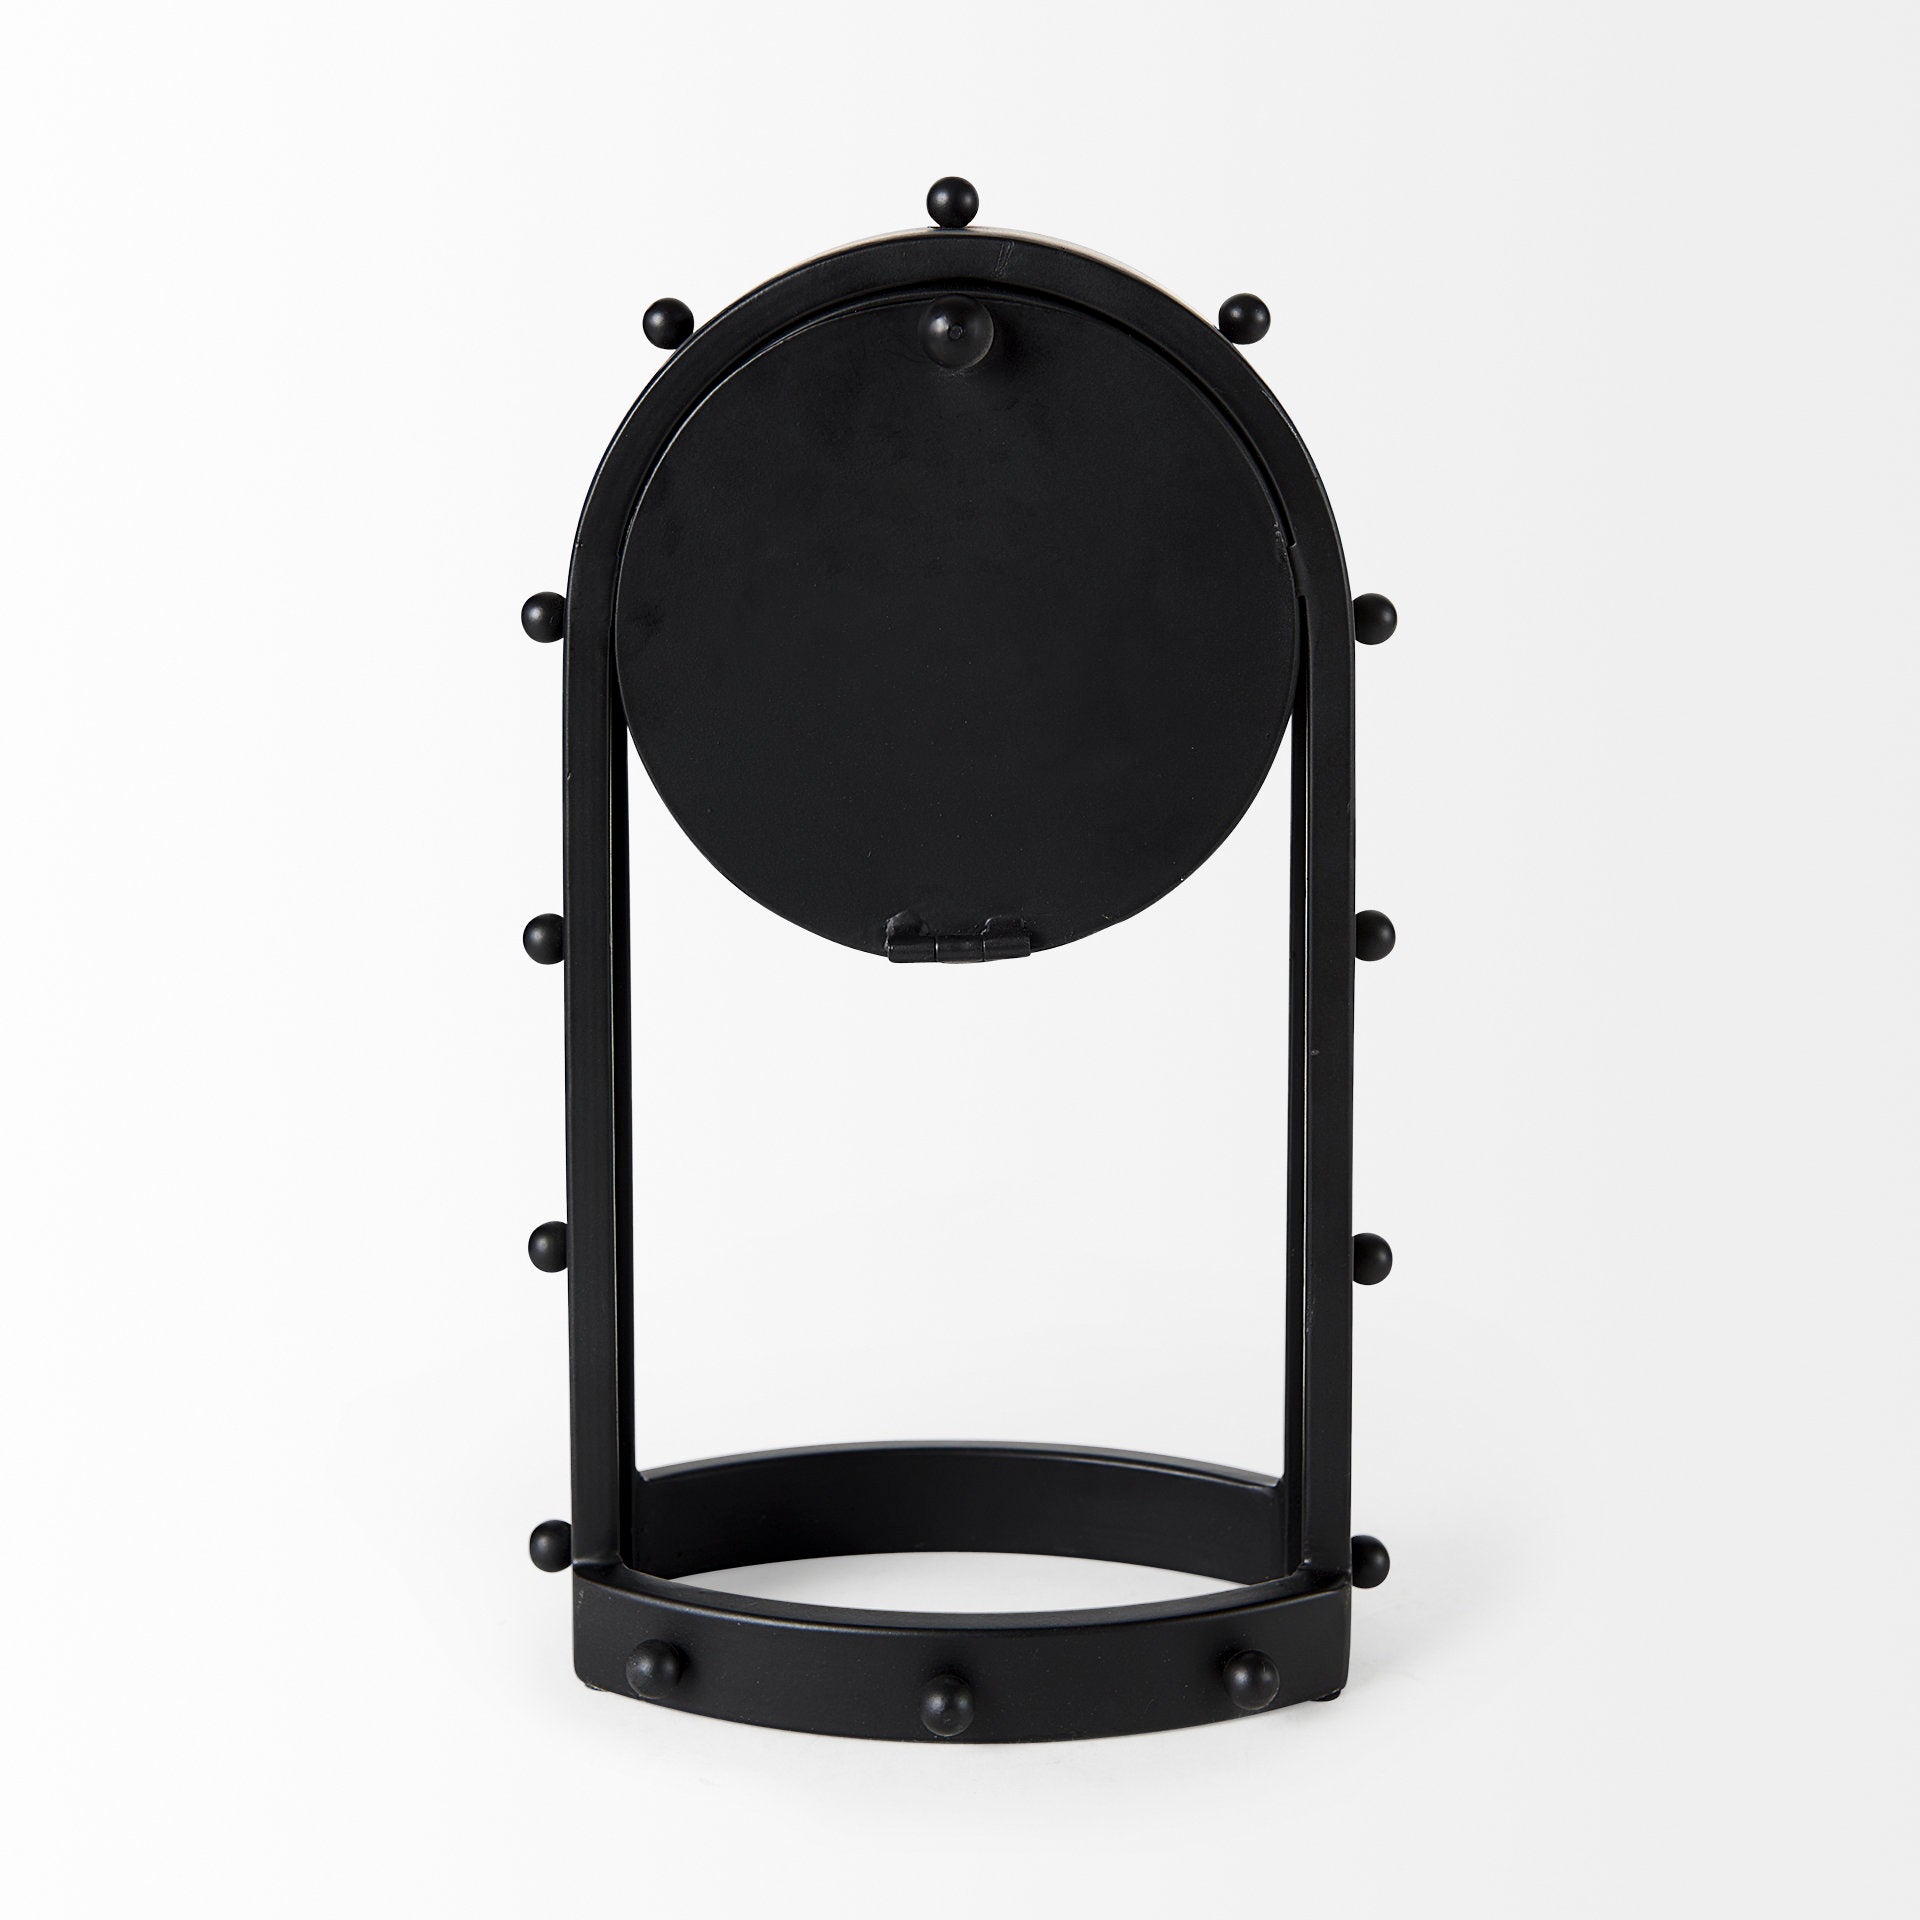 Mercana Marian Black Studded Table Clock